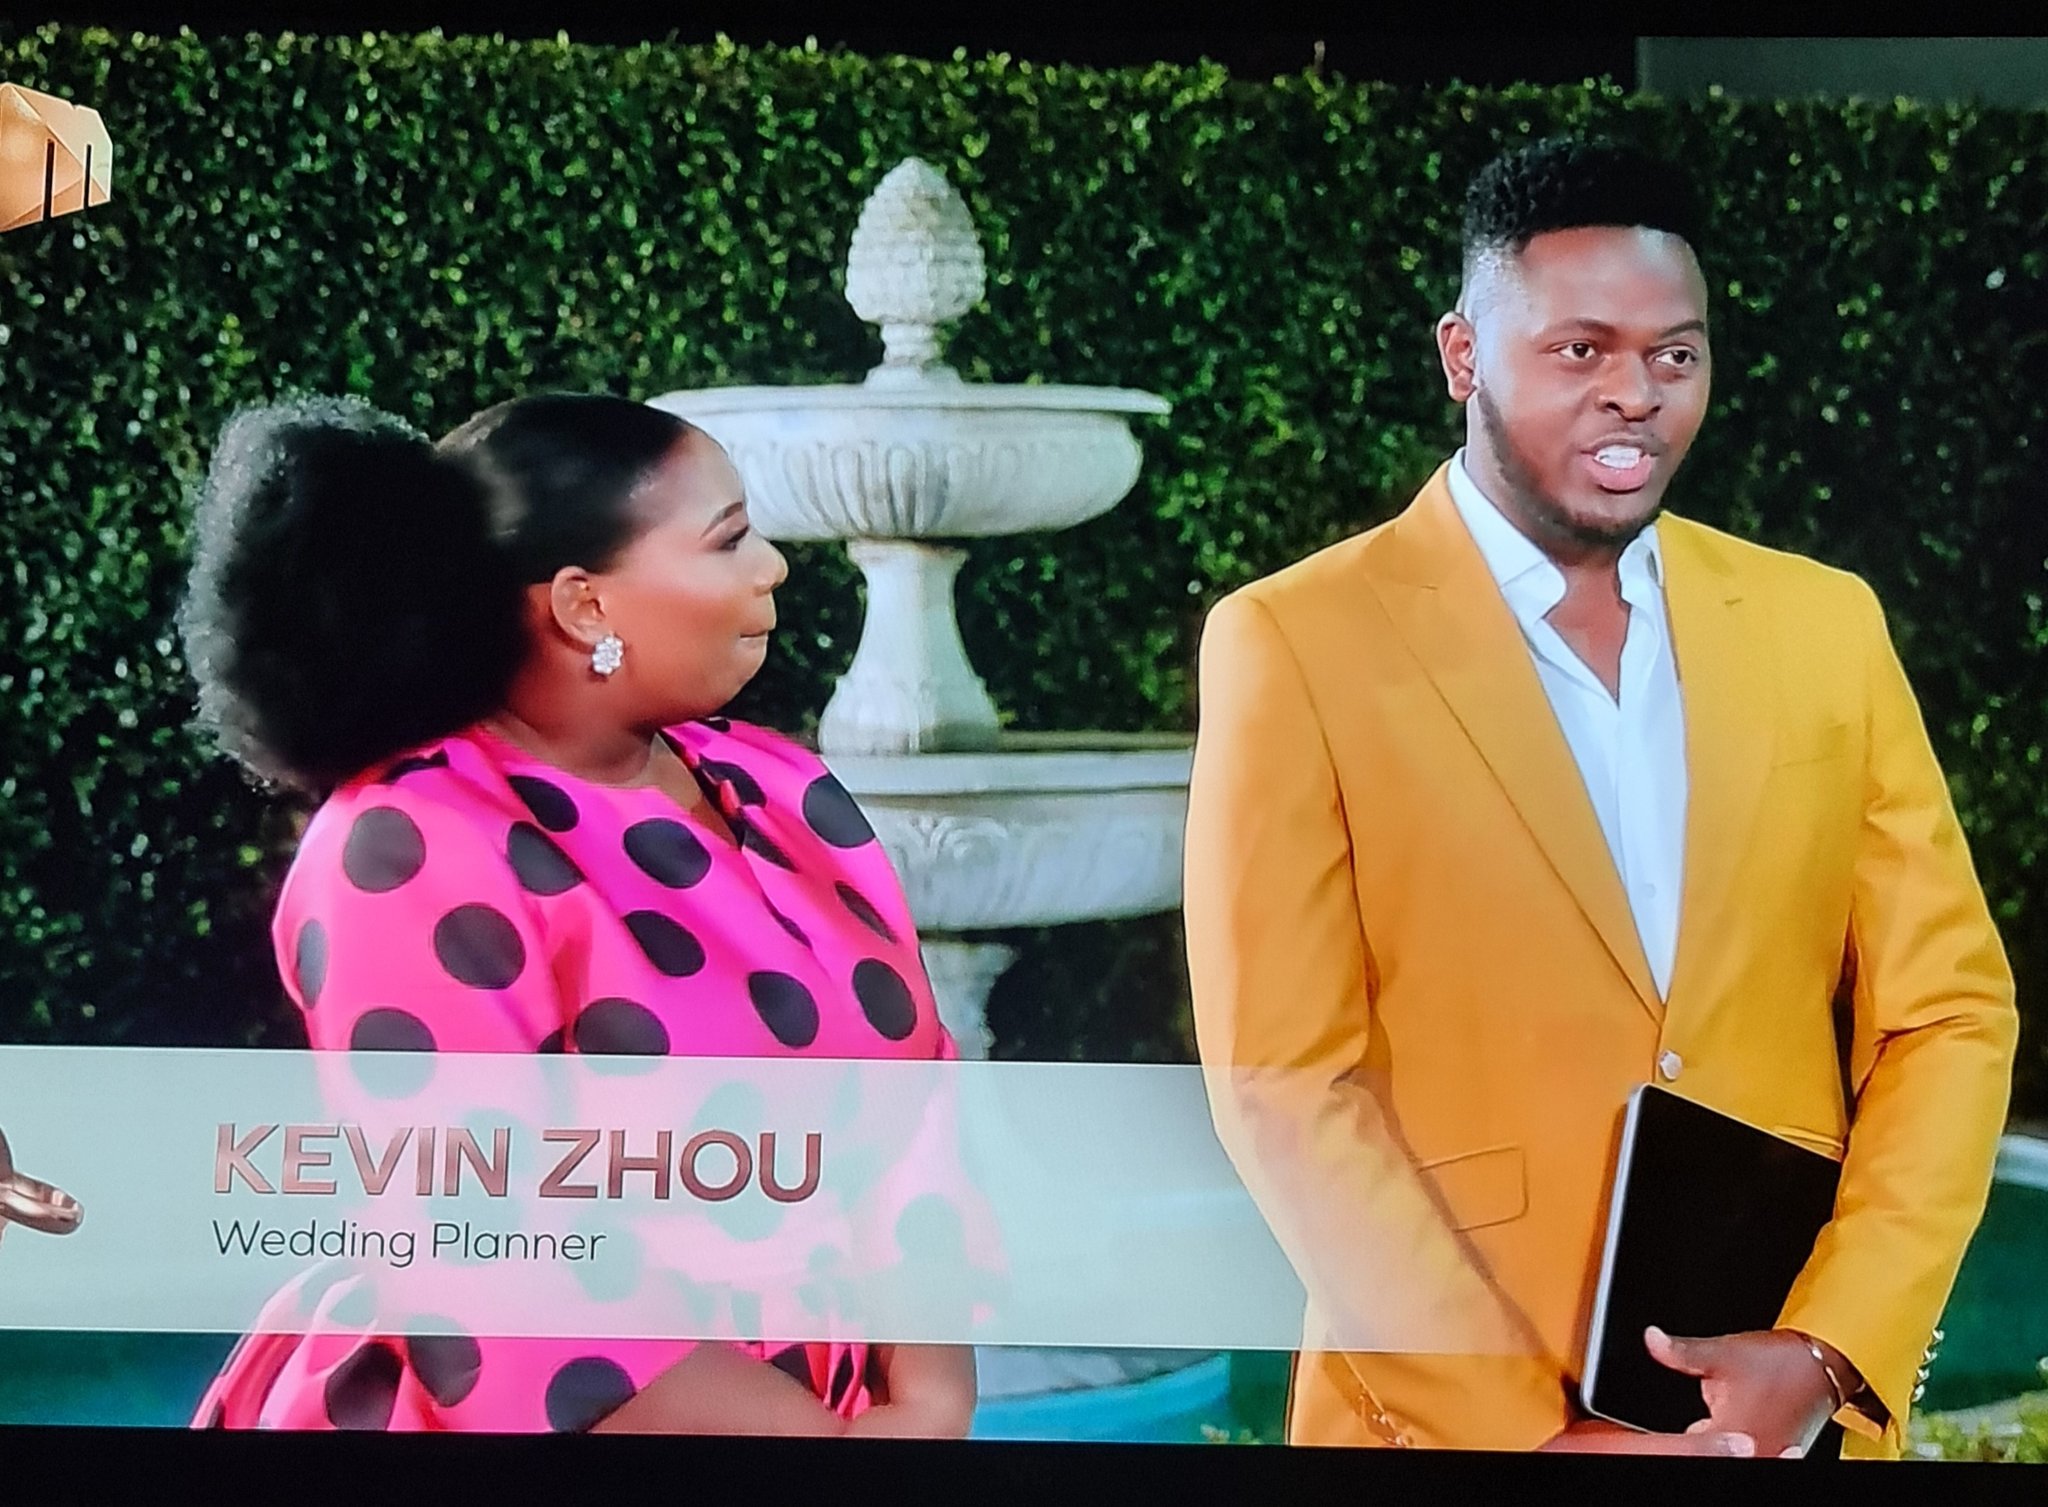 Kevin The Wedding Planner Entrepreneur Profile - StartupBiz Zimbabwe